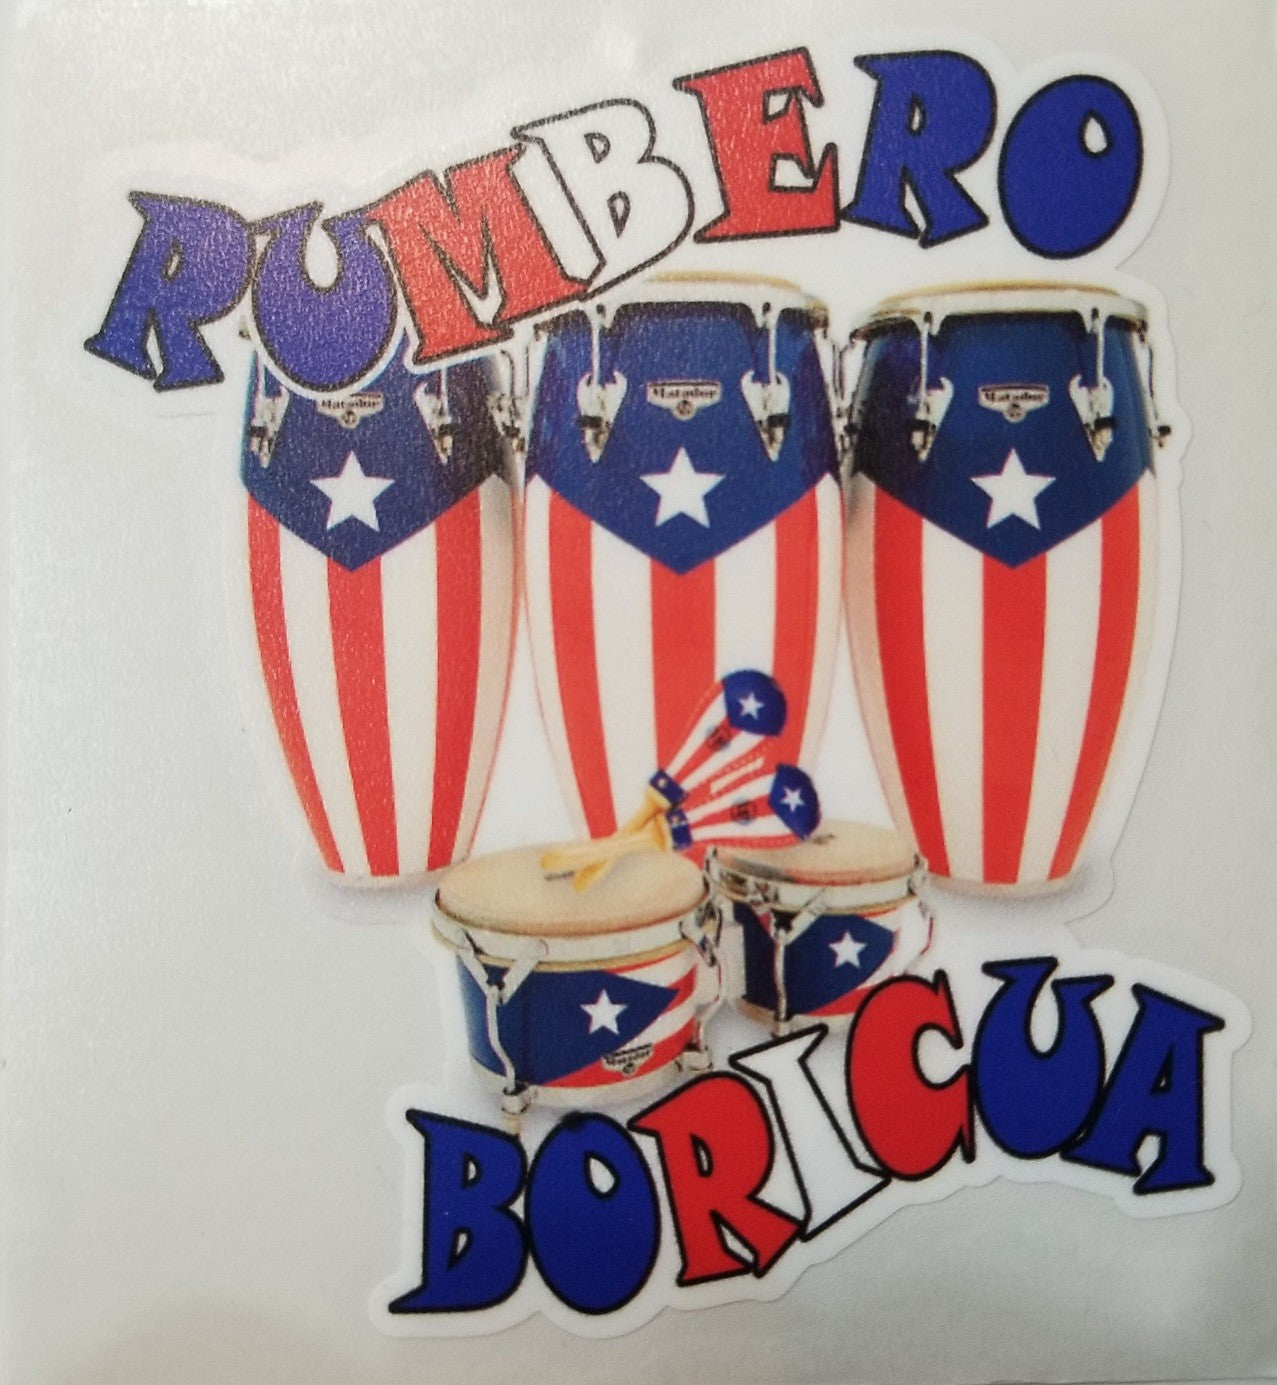 Sticker de PR - Rumbero Boricua